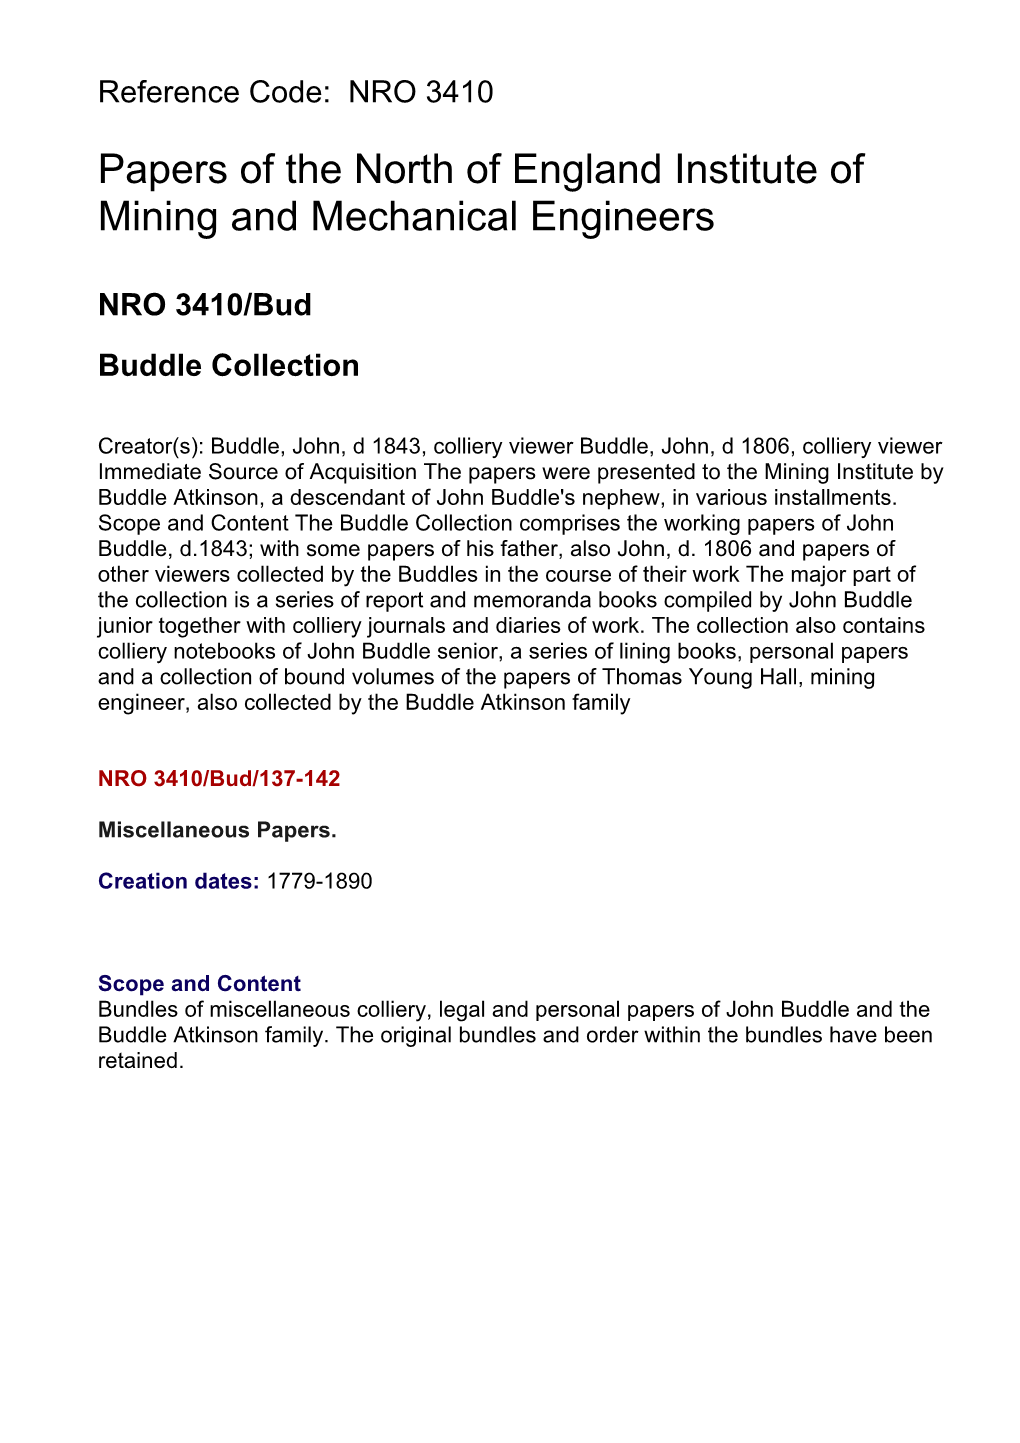 NRO 3410/Bud Buddle Collection